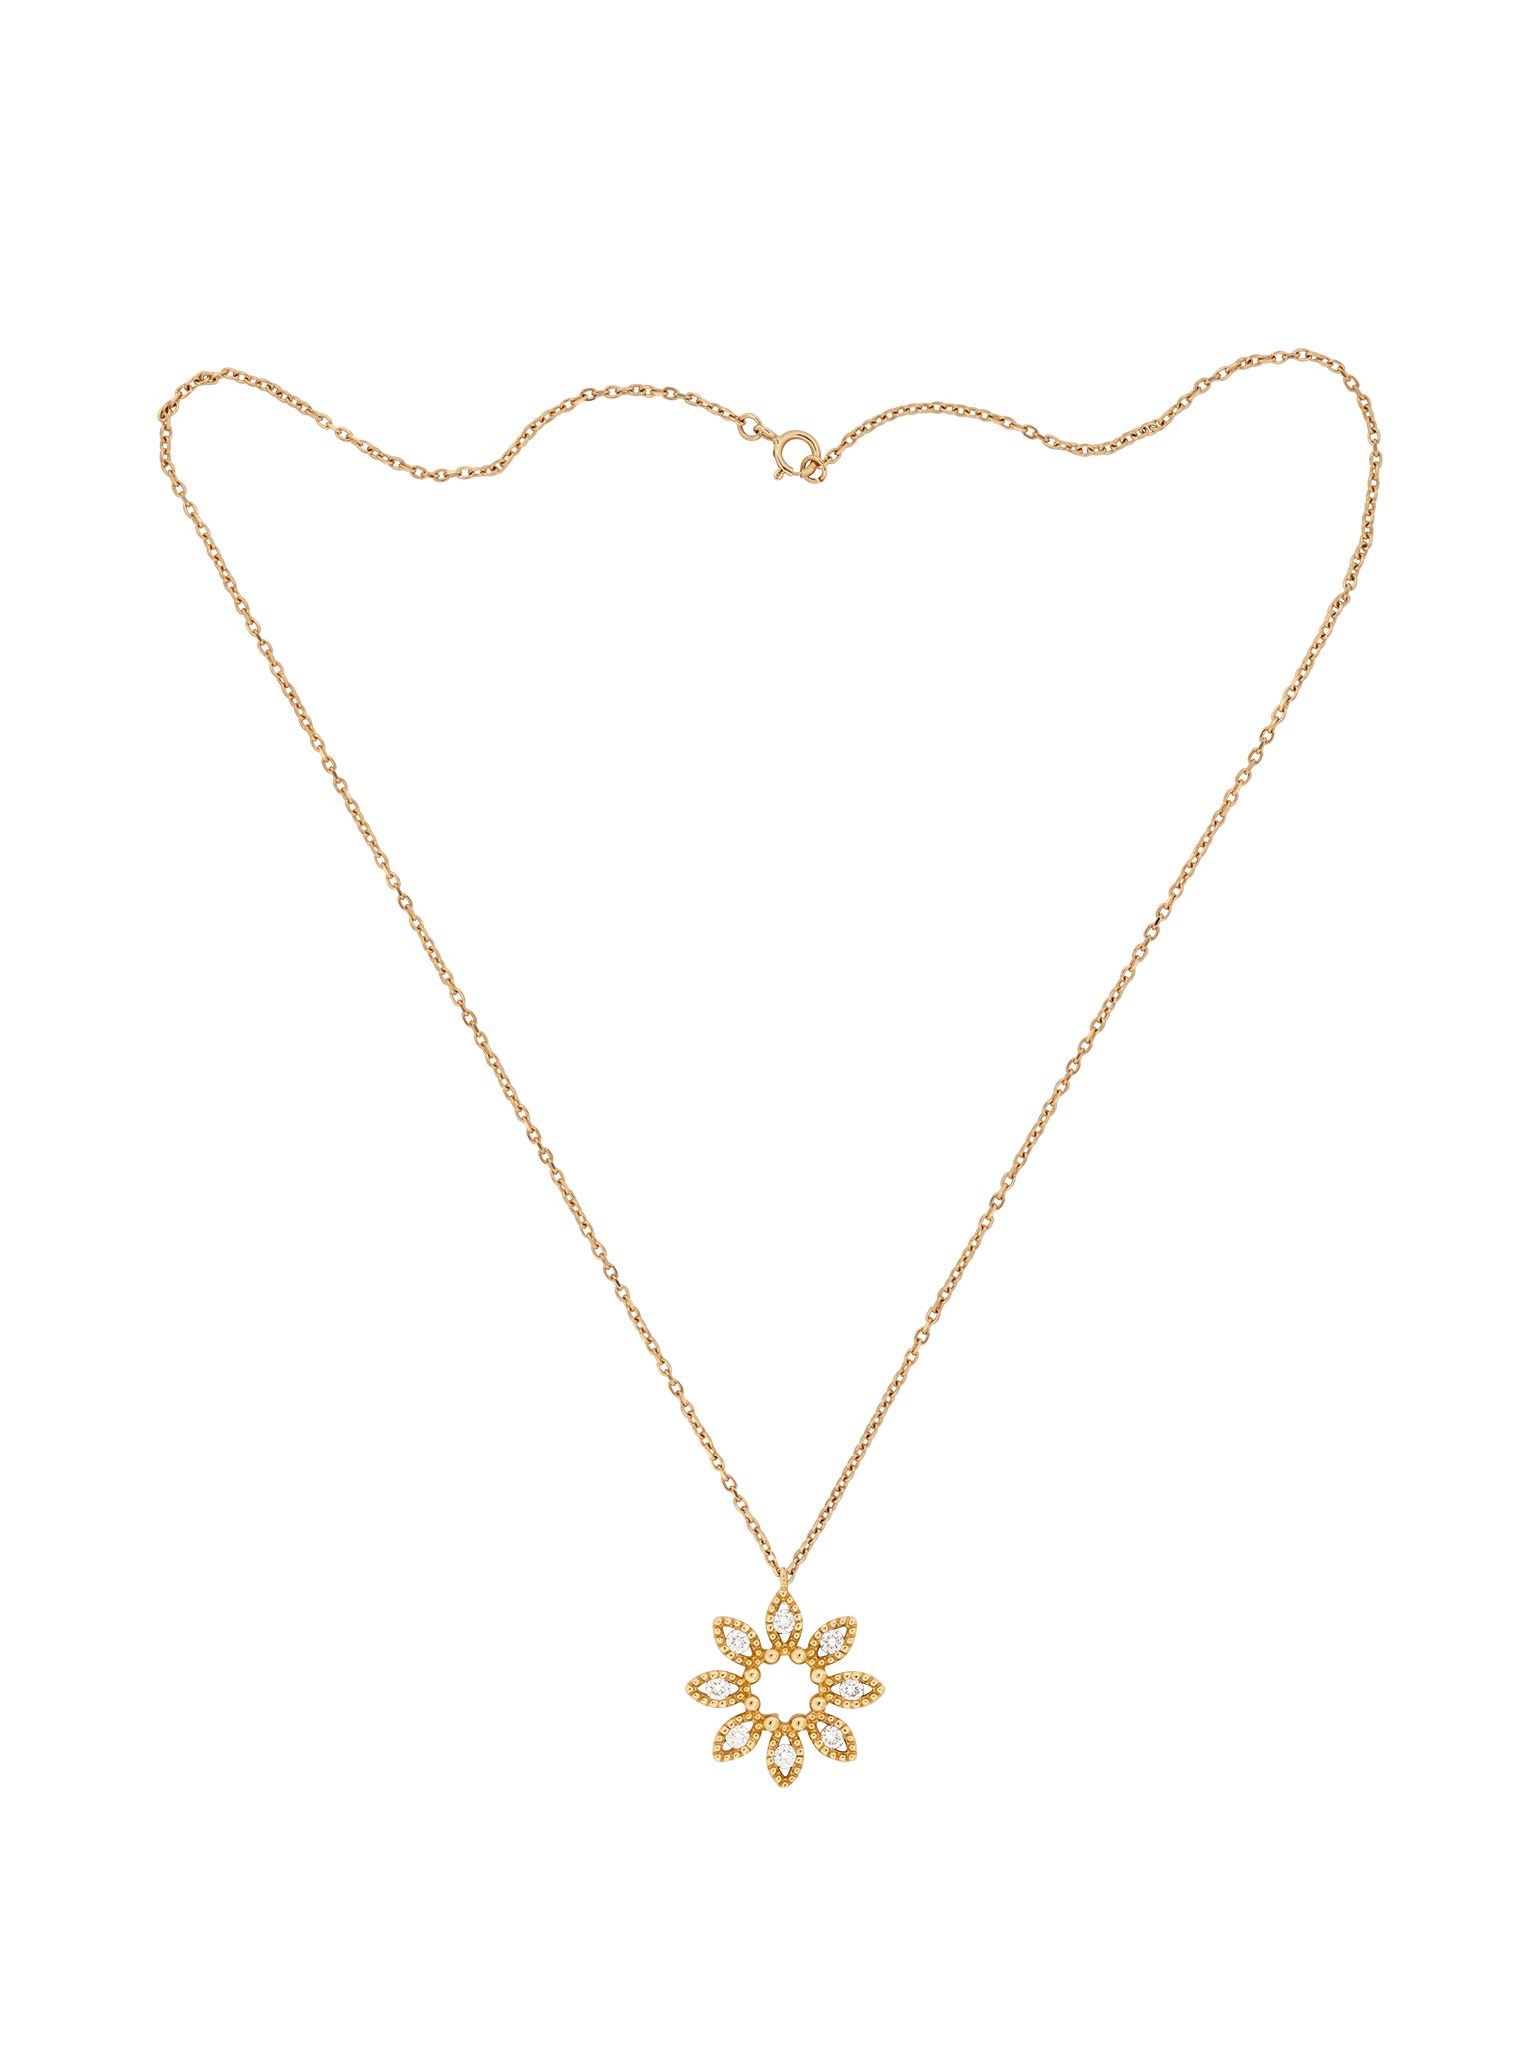 Jasmine flower pendant necklace photo 2